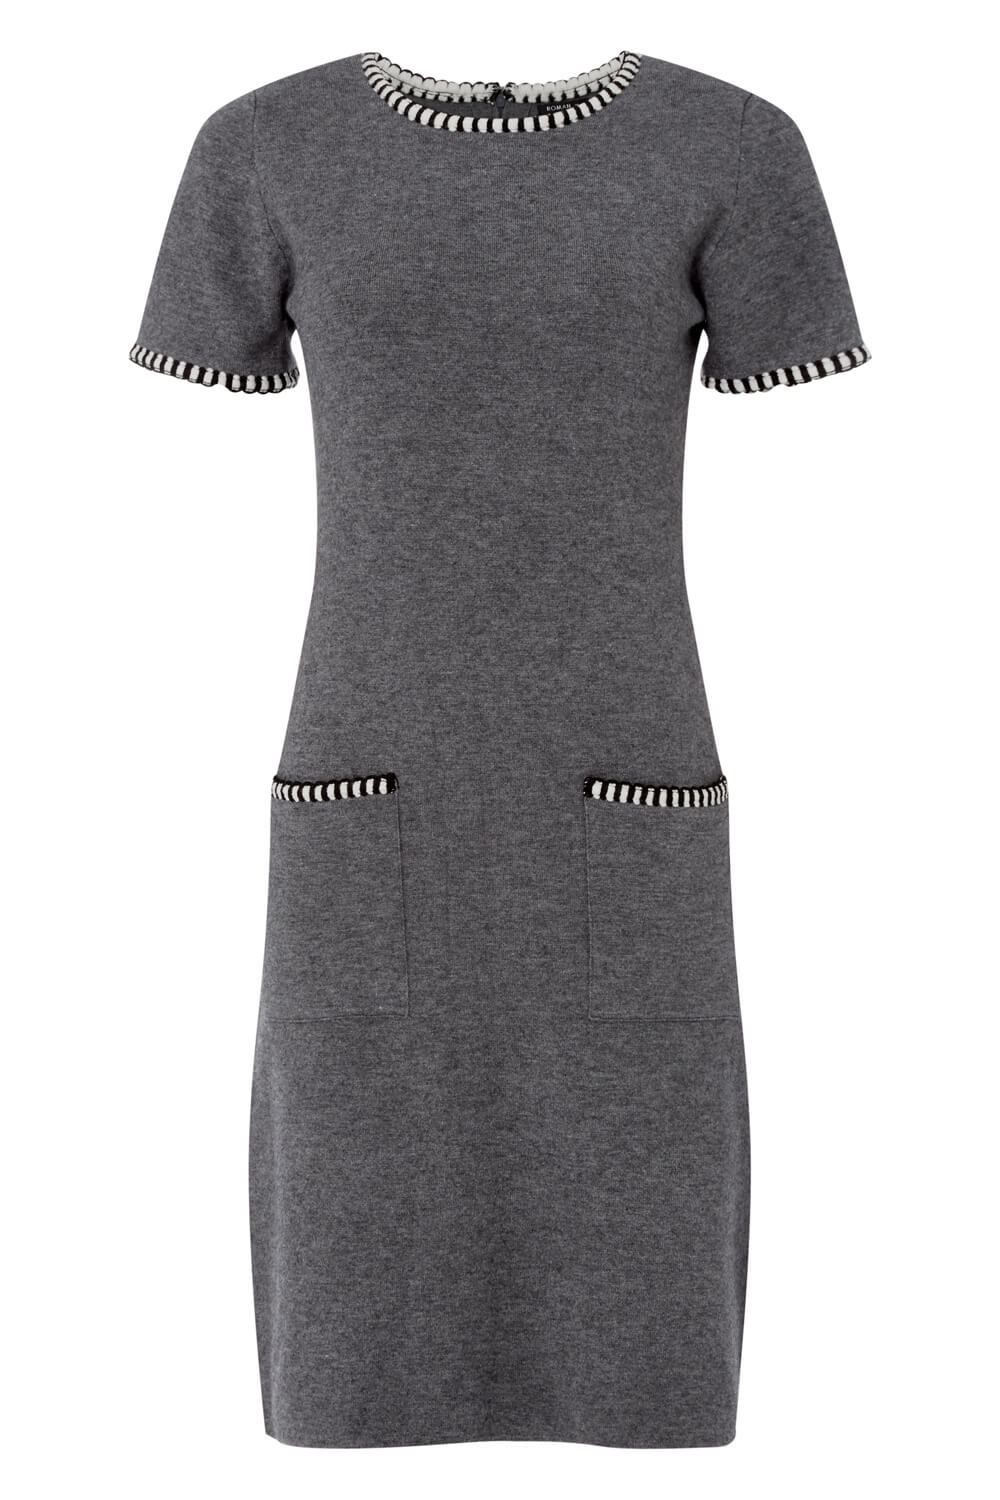 Contrast Trim Knit Dress in Grey - Roman Originals UK